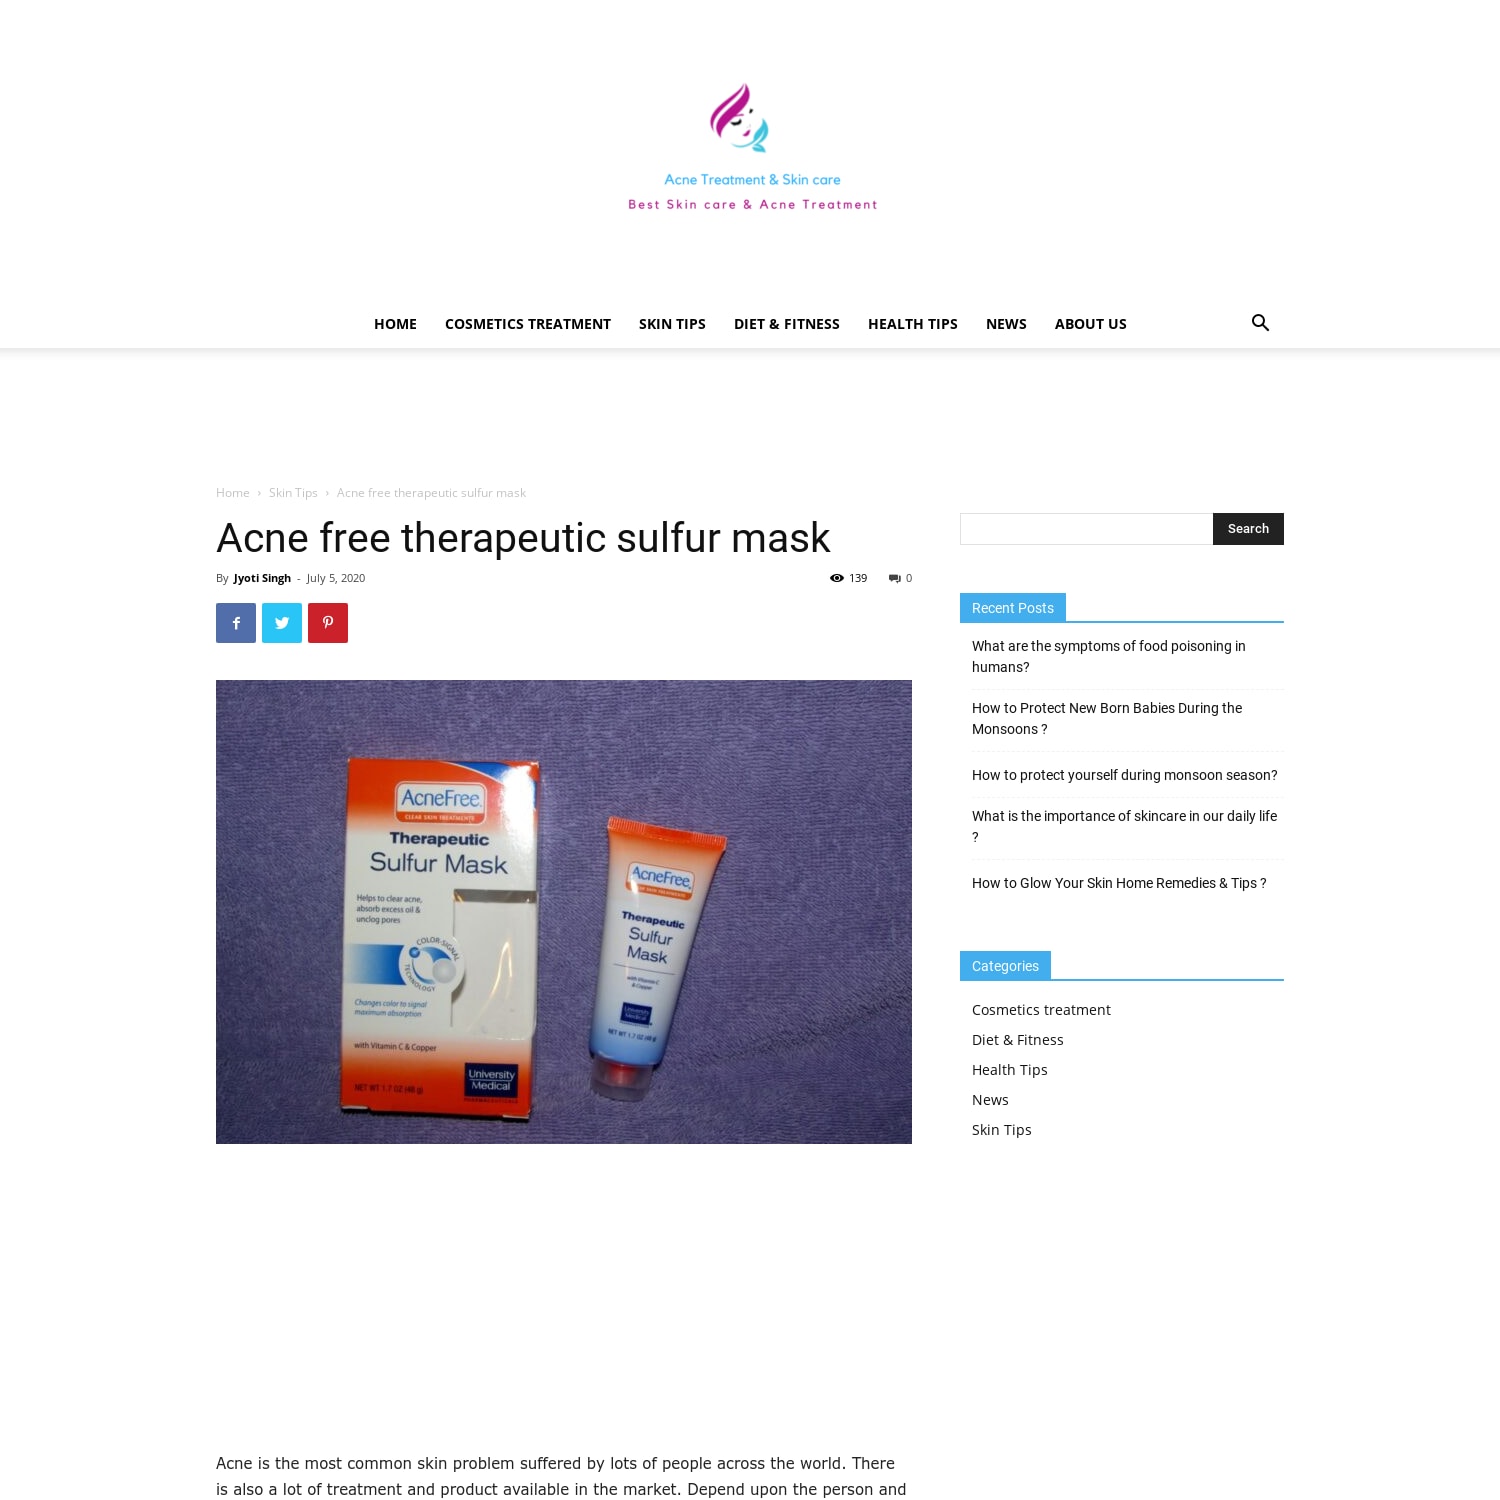 Acne free therapeutic sulfur mask - Skin Care & Acne Treatment